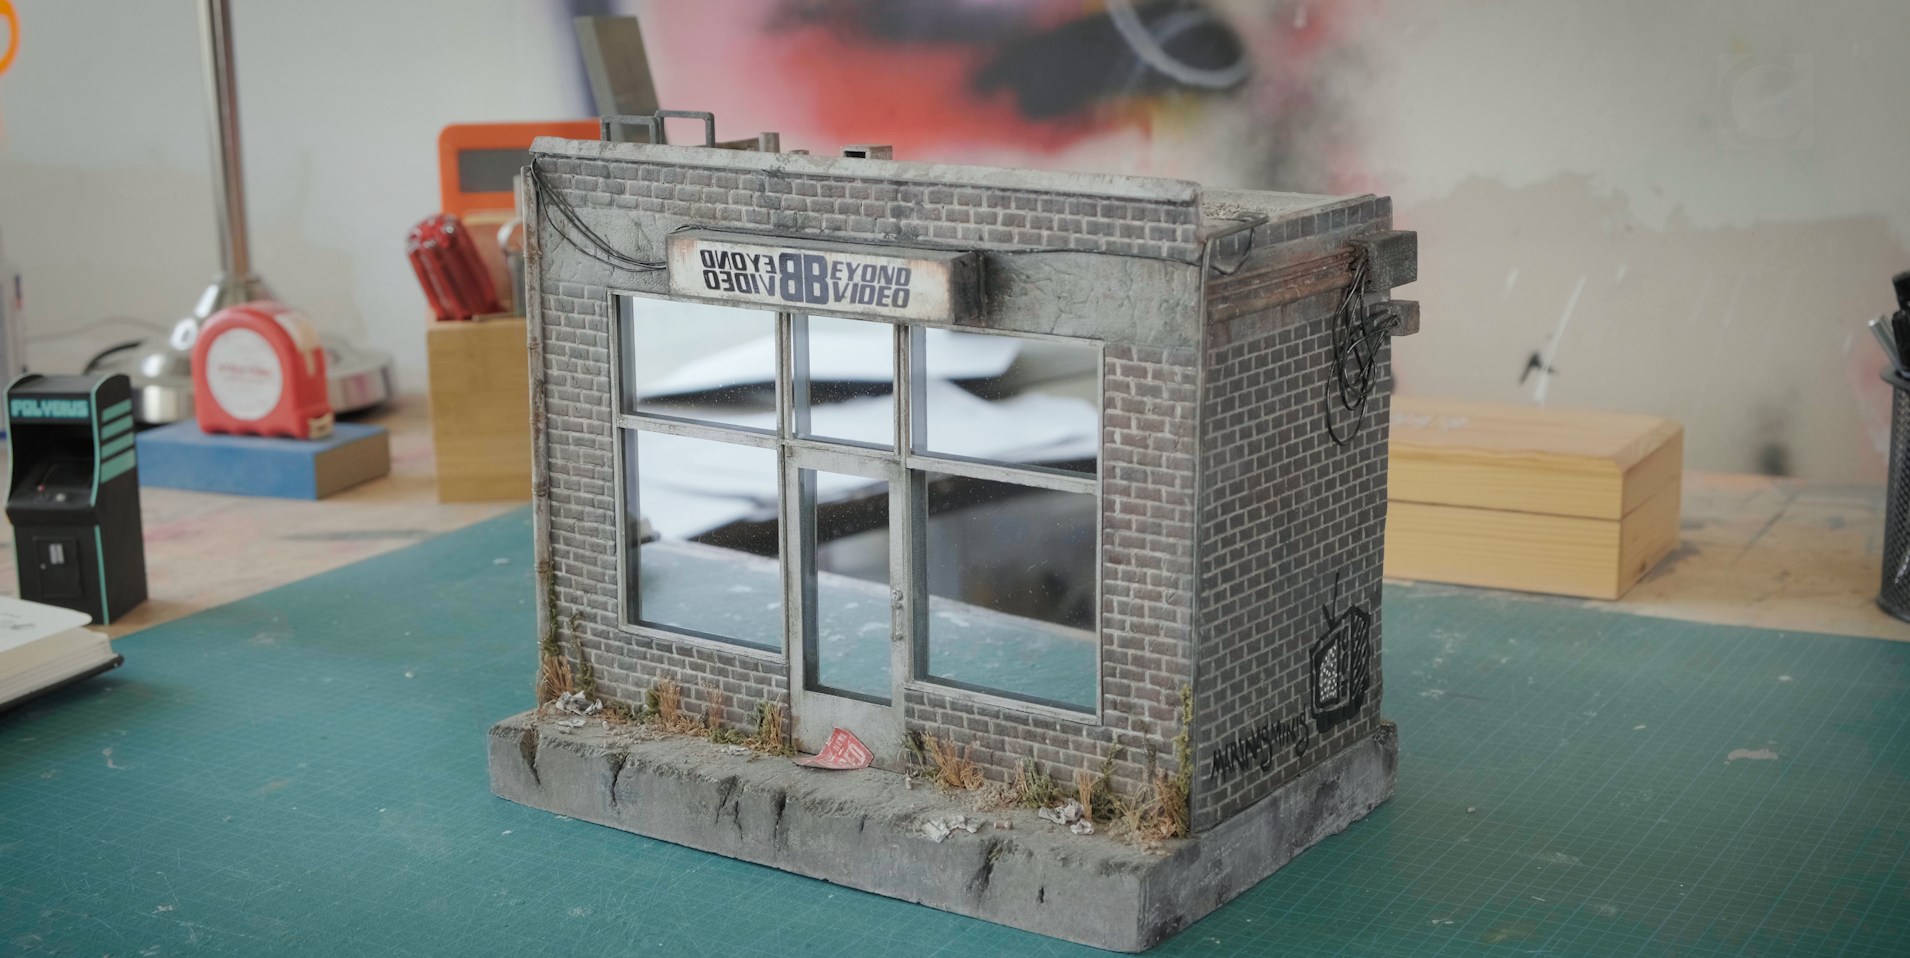 A miniature video store designed by multidisciplinary artist Marina Totino